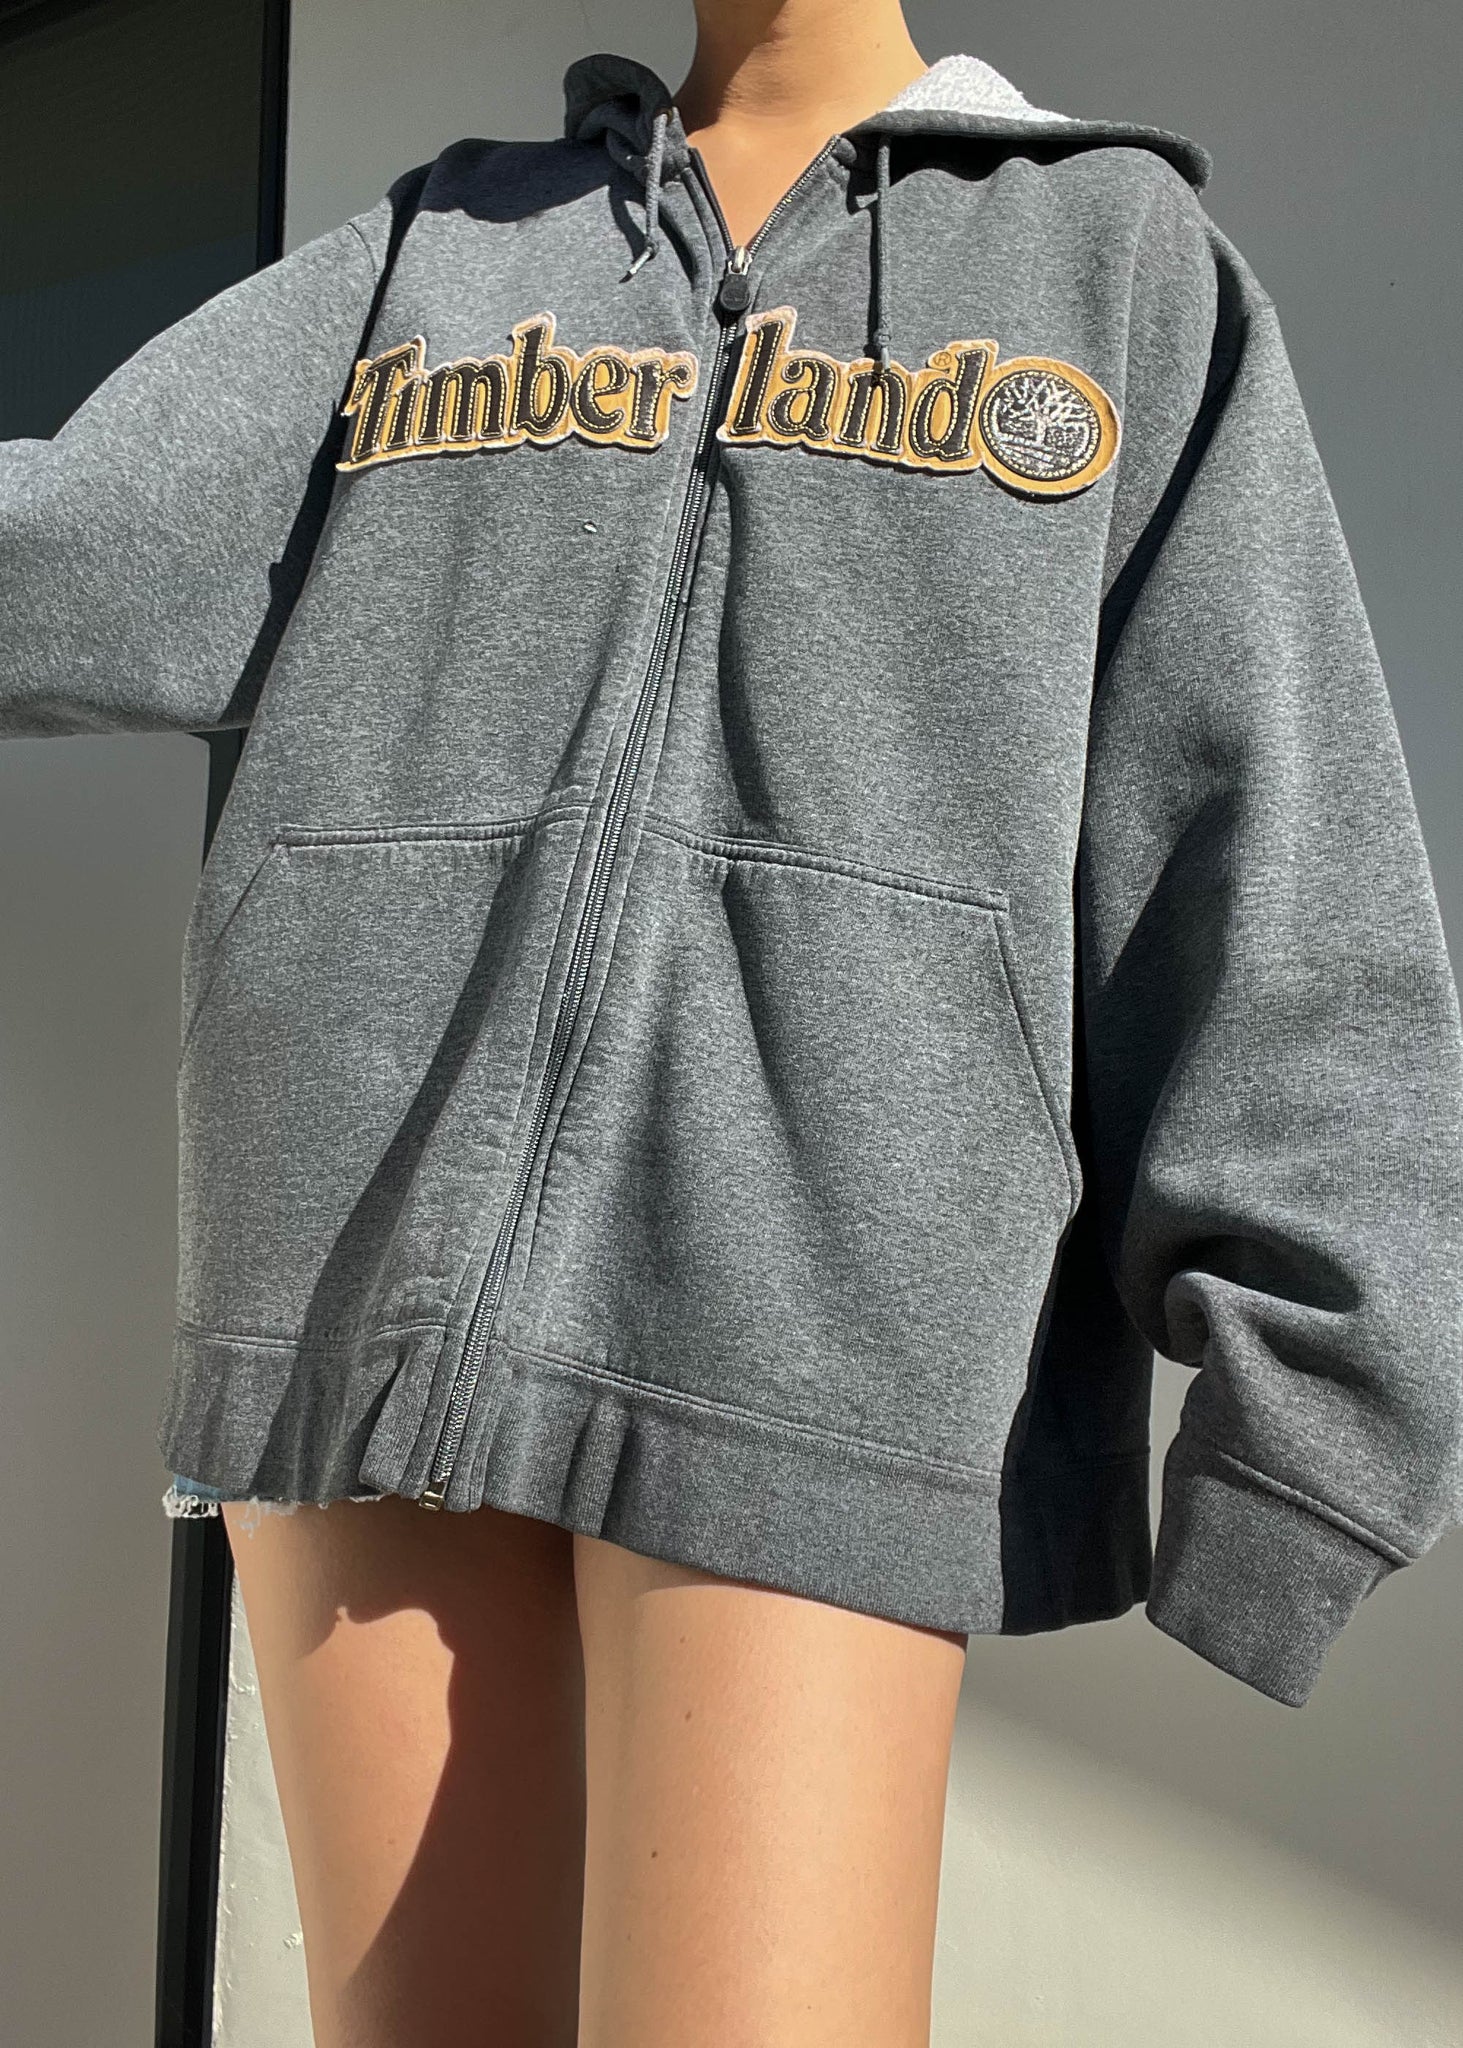 Timberland Hoodie Jacket (L-XL)